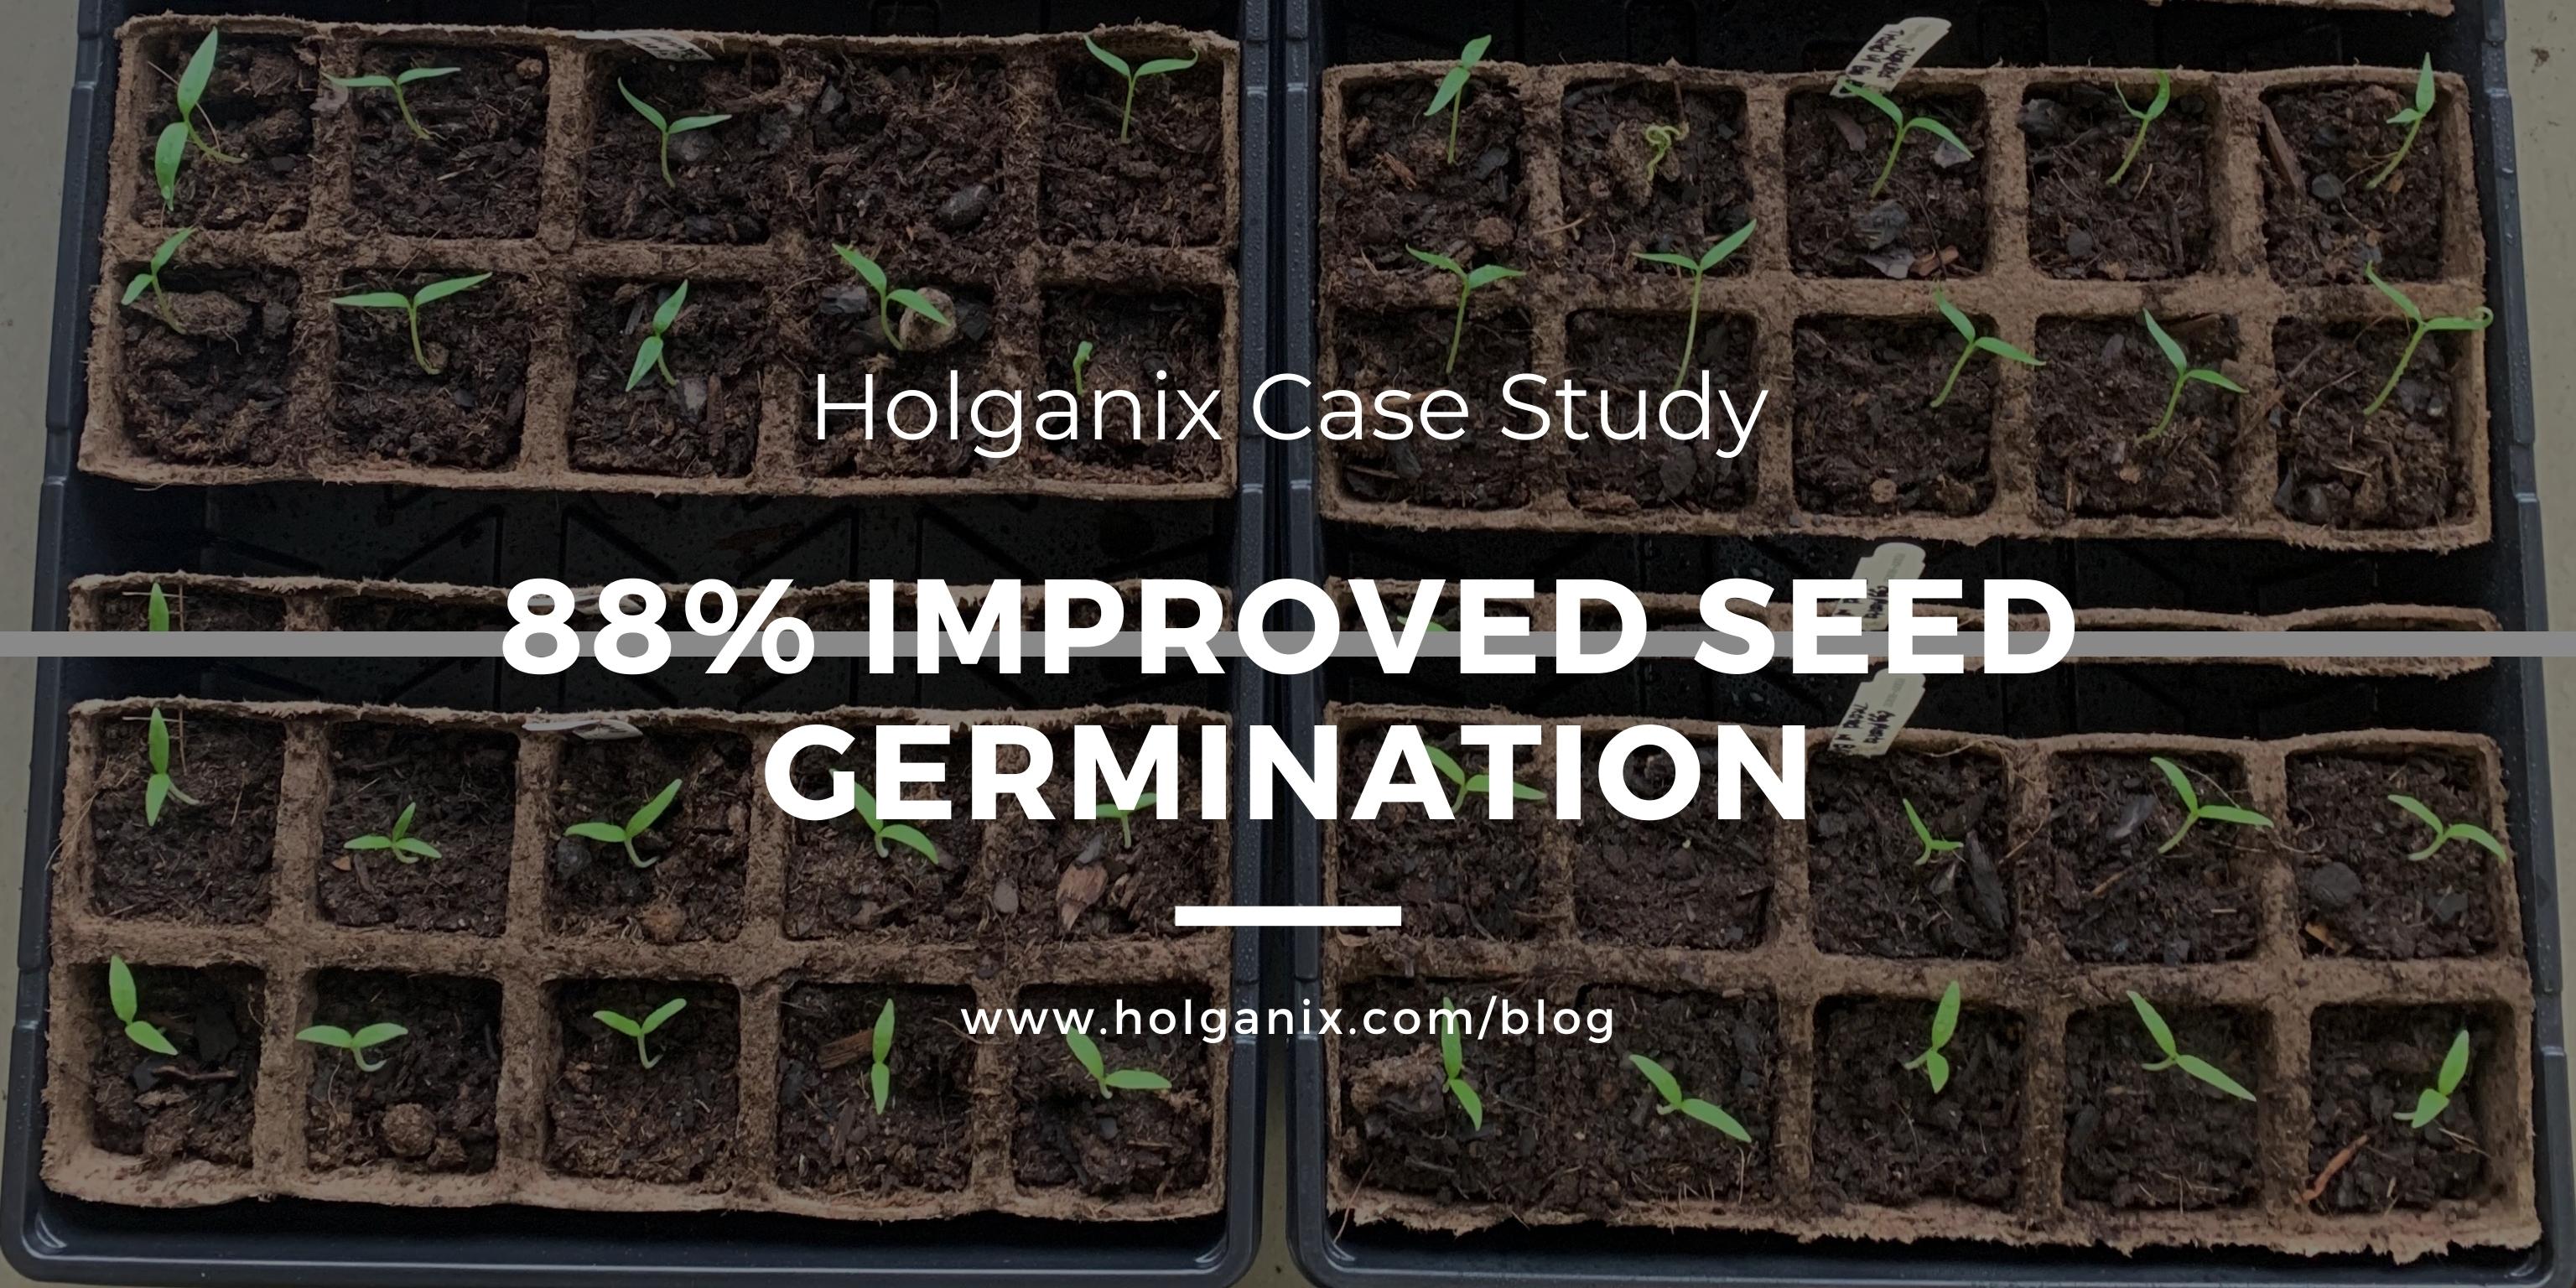 Holganix Case Study: 88% Improved Seed Germination